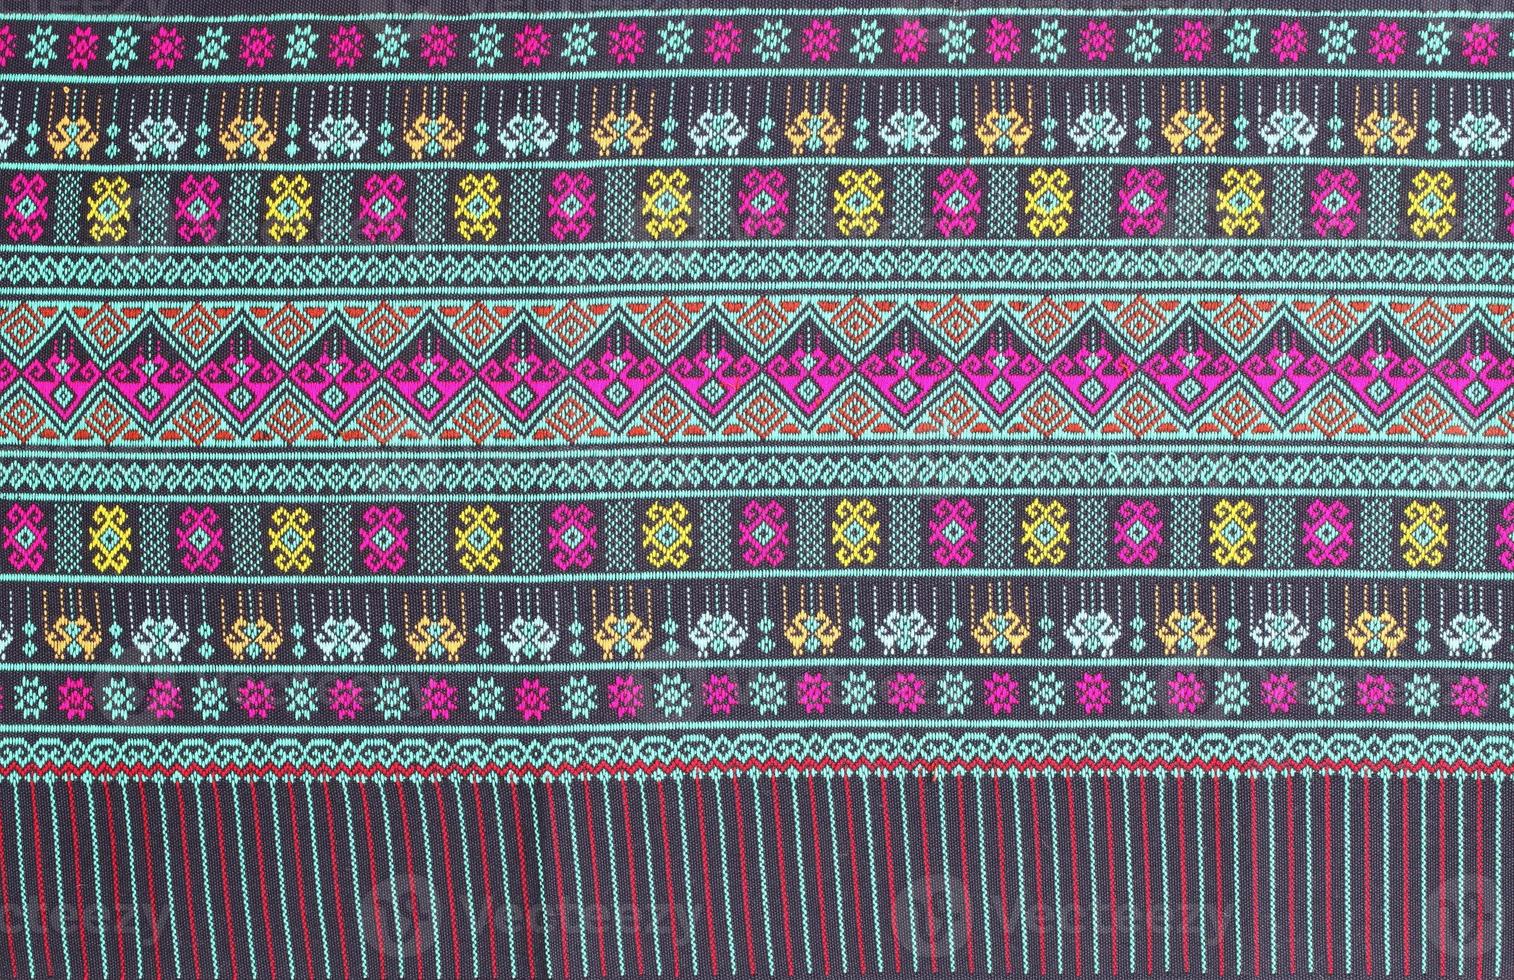 Thaise zijde stof patroon achtergrond foto